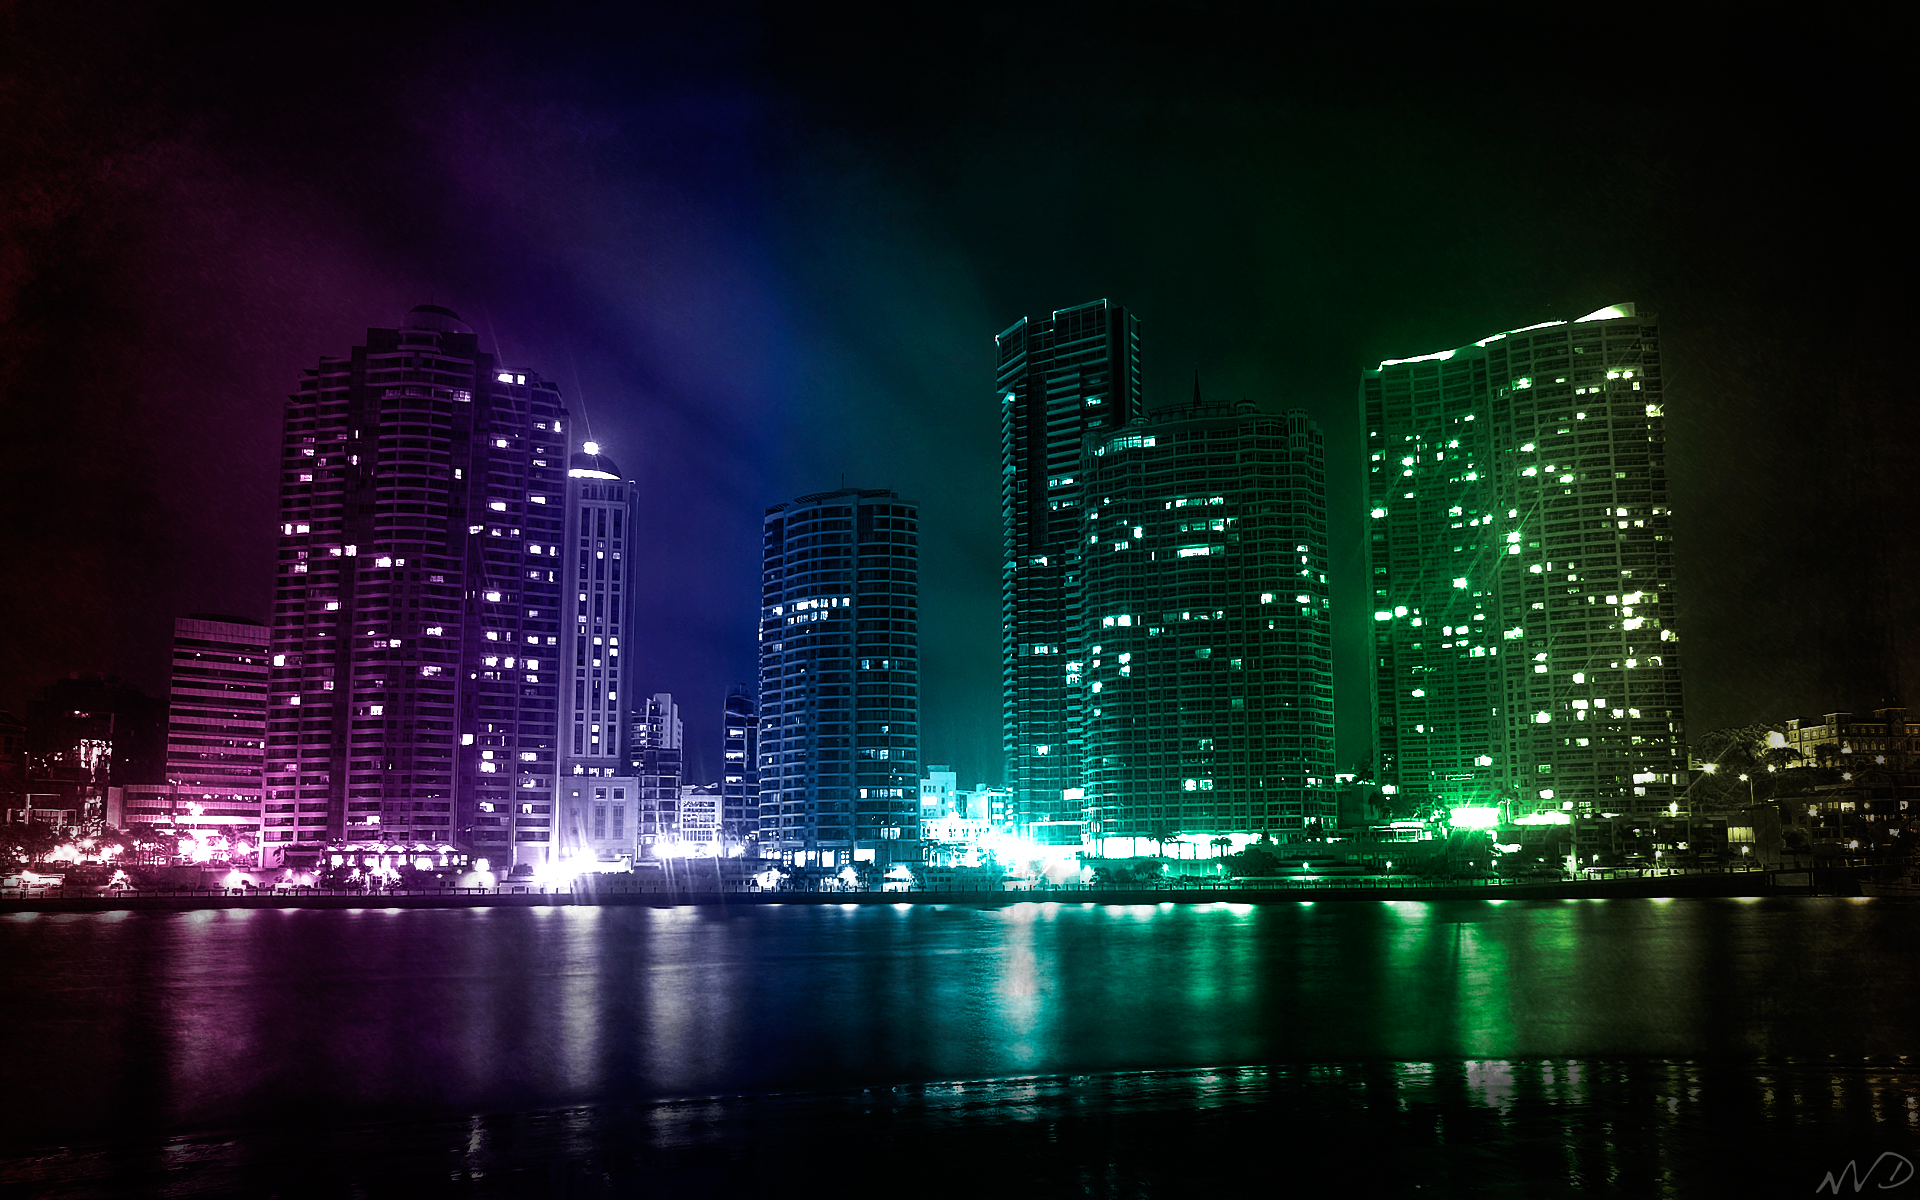 City HD Wallpaper Image For Desktop